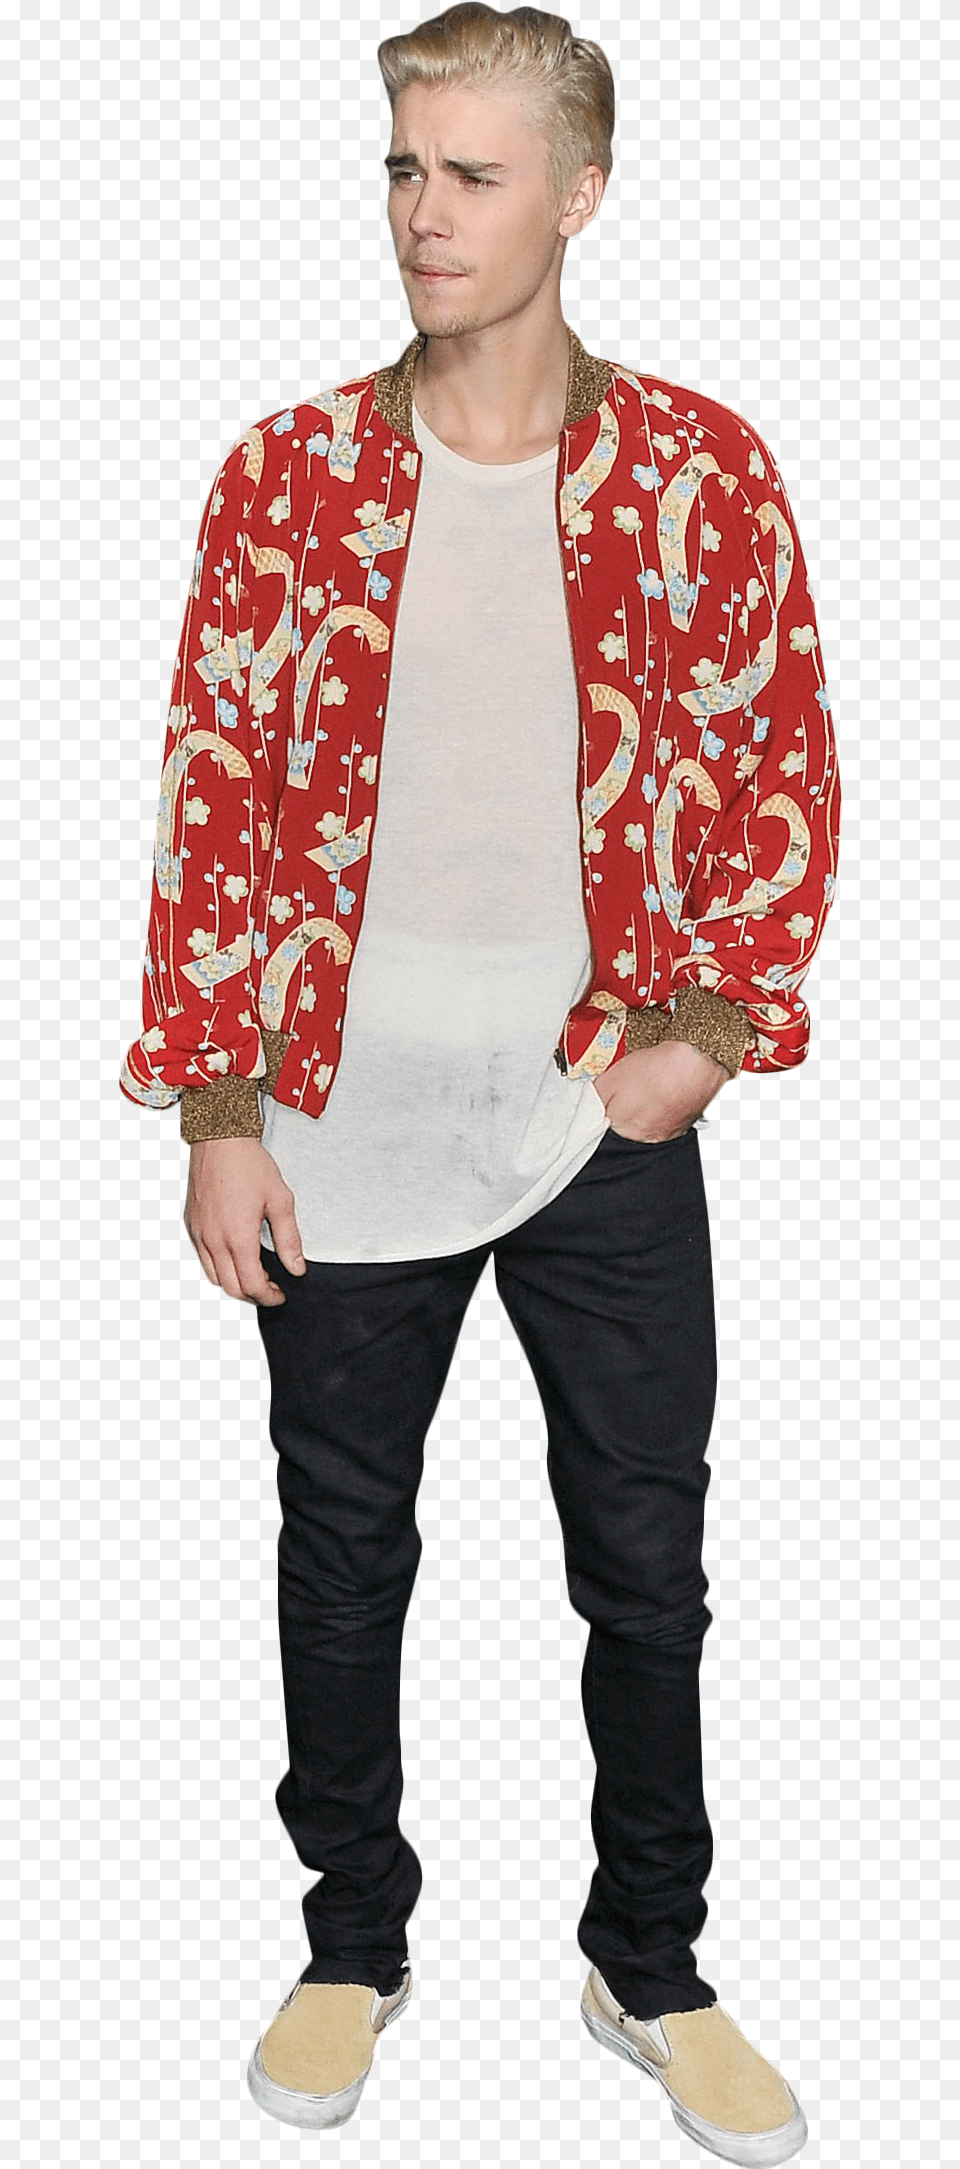 Justin Bieber Dressed In A Red Shirt Image, Blazer, Clothing, Coat, Jacket Png